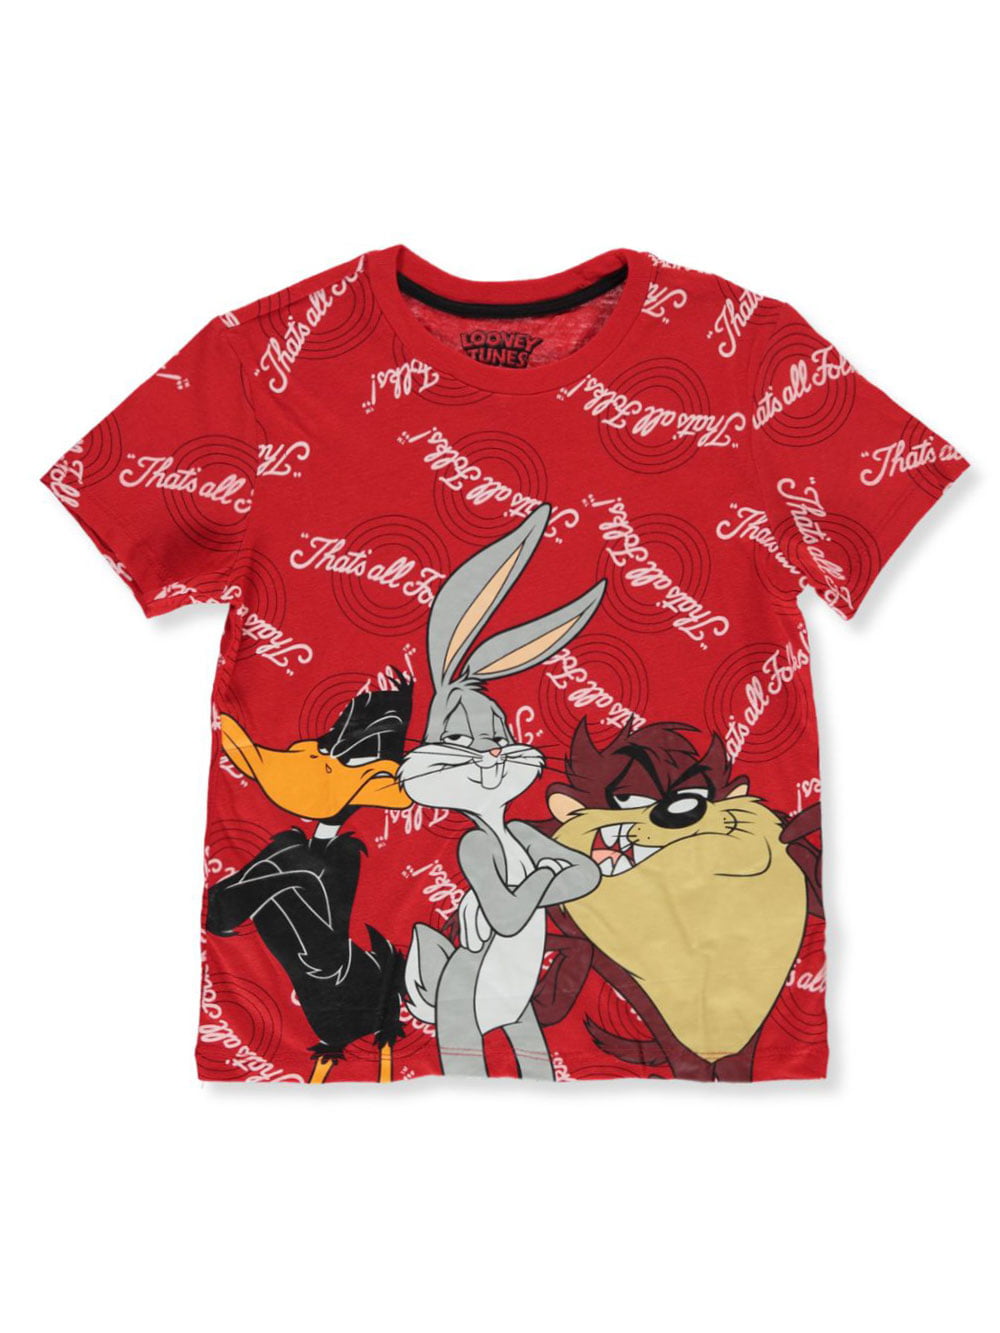 Screen Printed Kids T Shirt Bunny on Bike Toddler Shirt 100% Cotton 